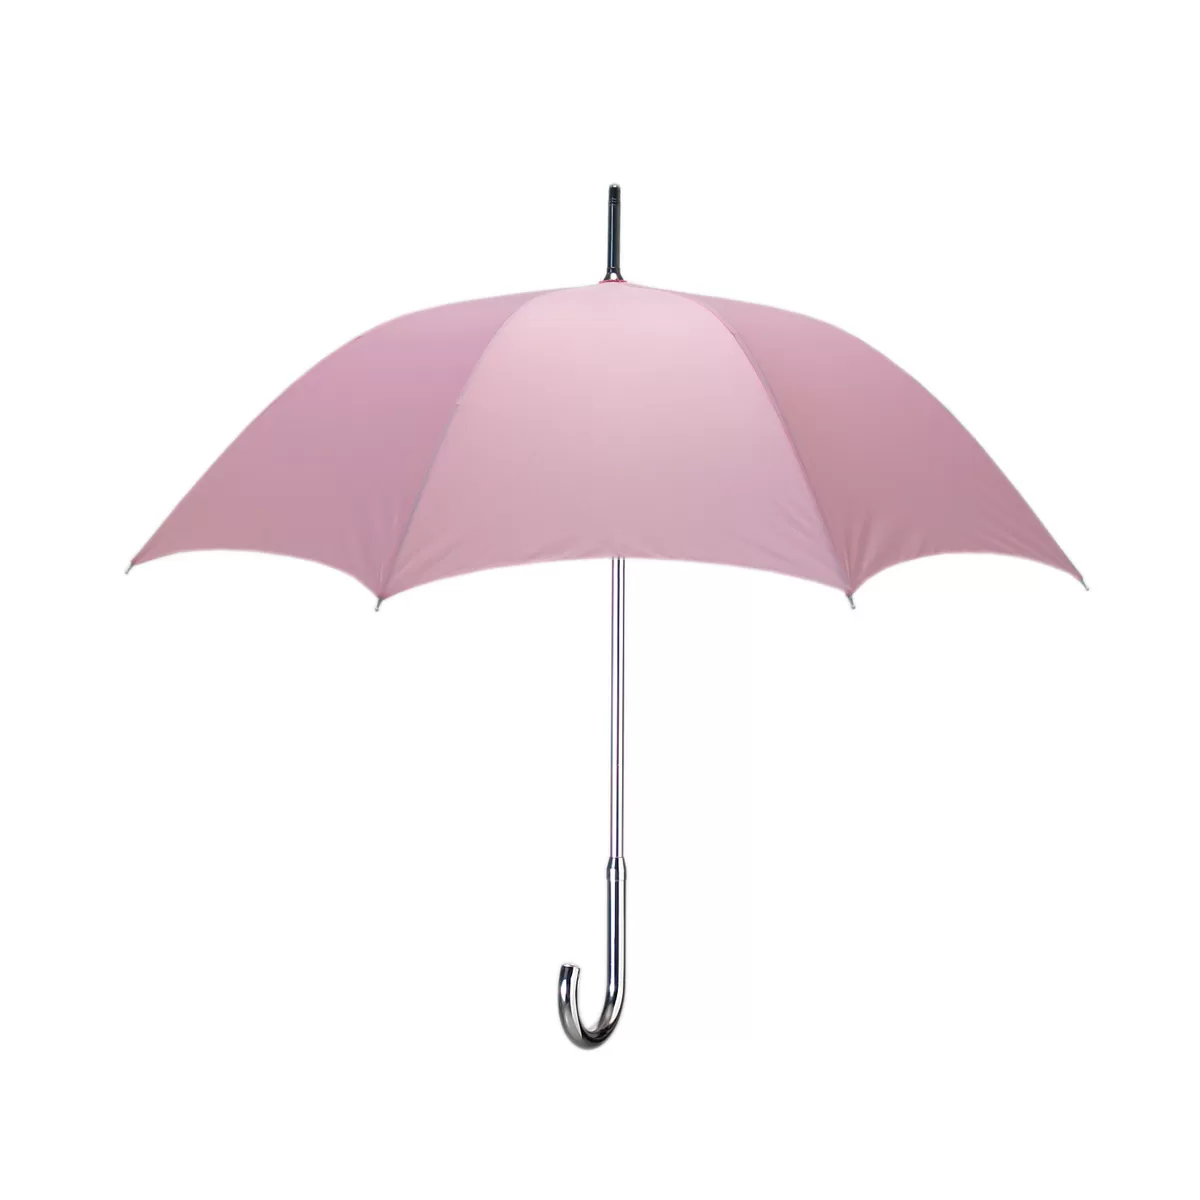 Aluminum Frame Umbrella - Pink